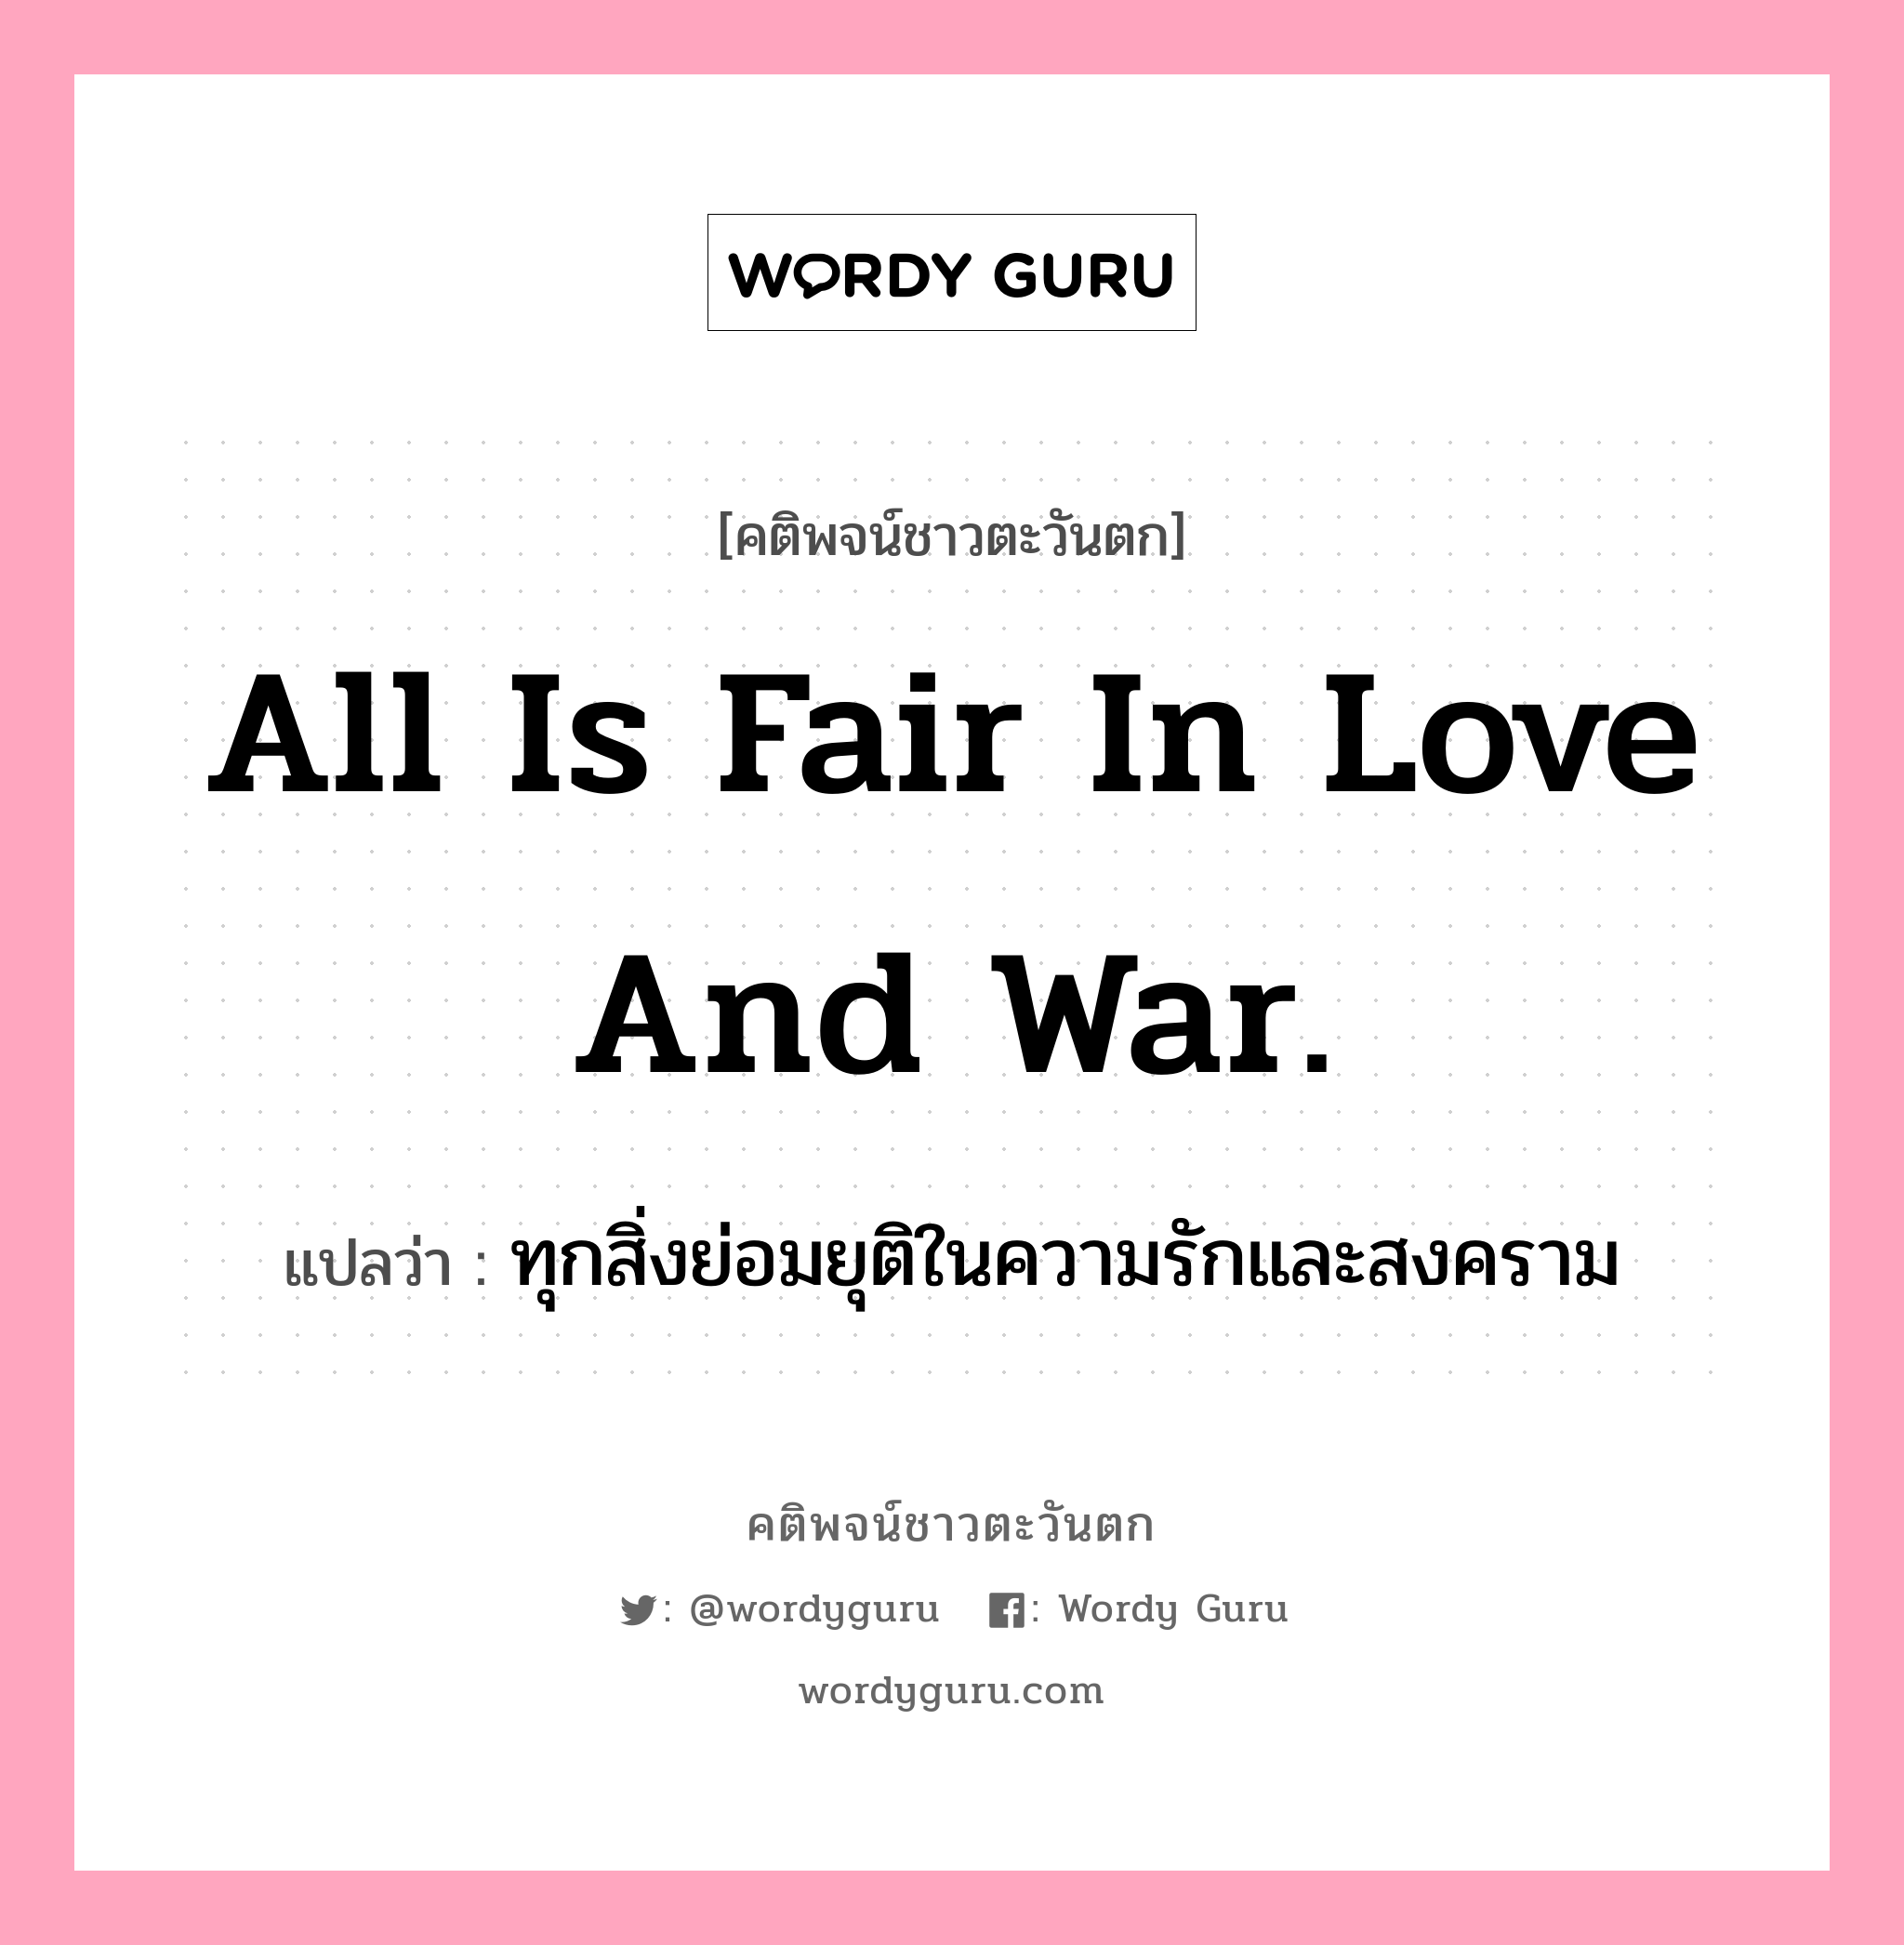 All is fair in love and war., คติพจน์ชาวตะวันตก All is fair in love and war. แปลว่า ทุกสิ่งย่อมยุติในความรักและสงคราม